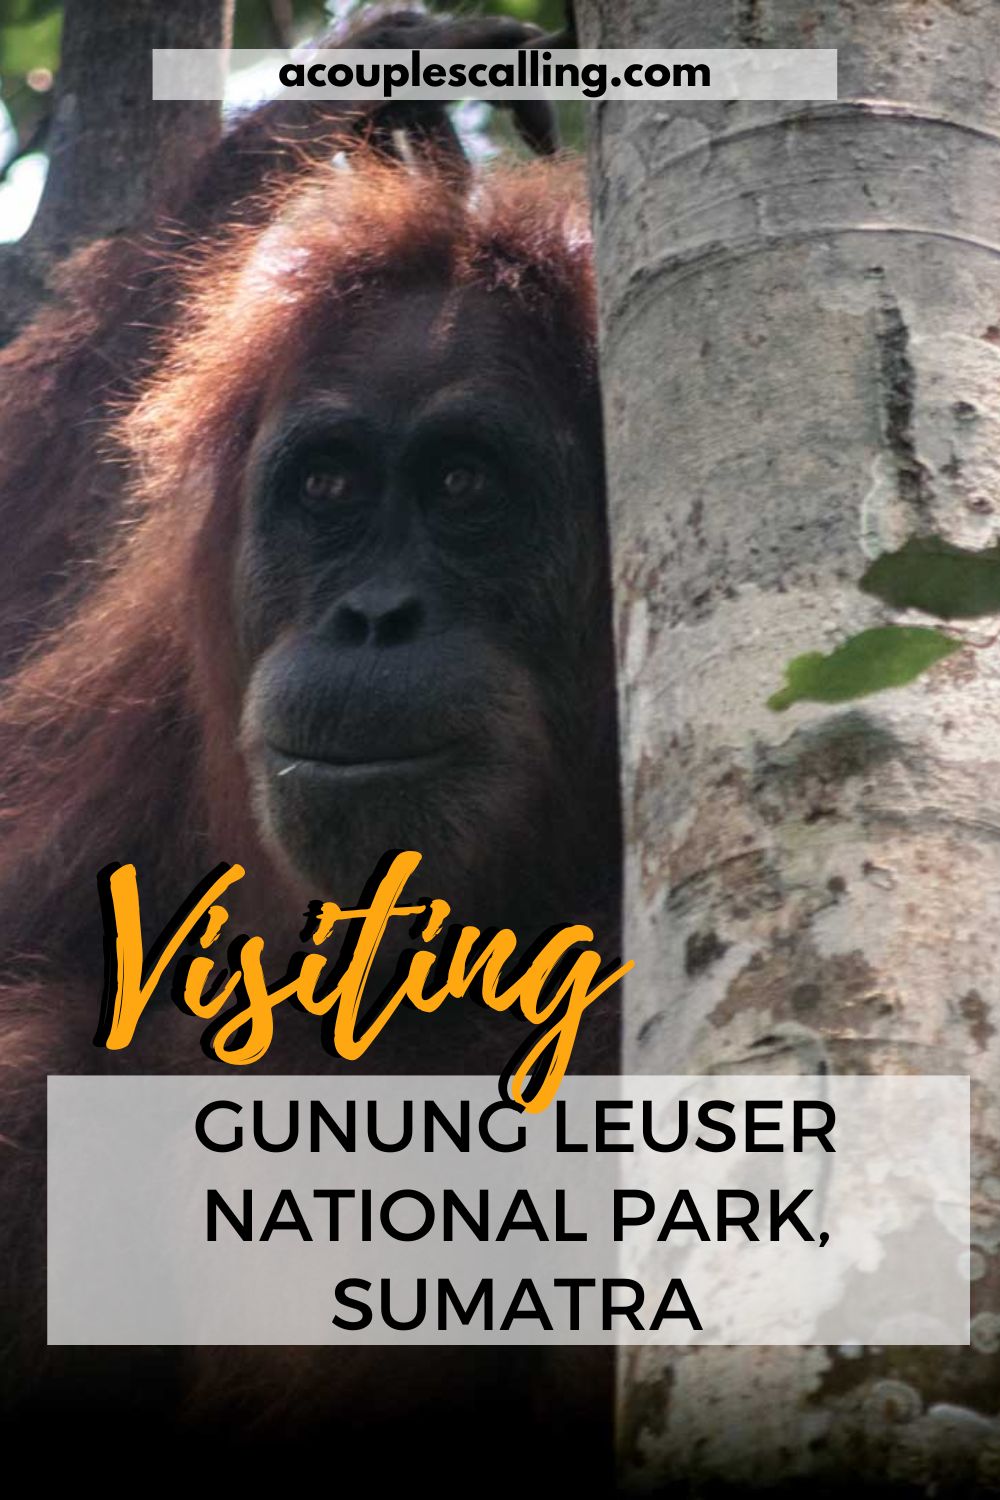 Visiting Gunung Leuser National Park